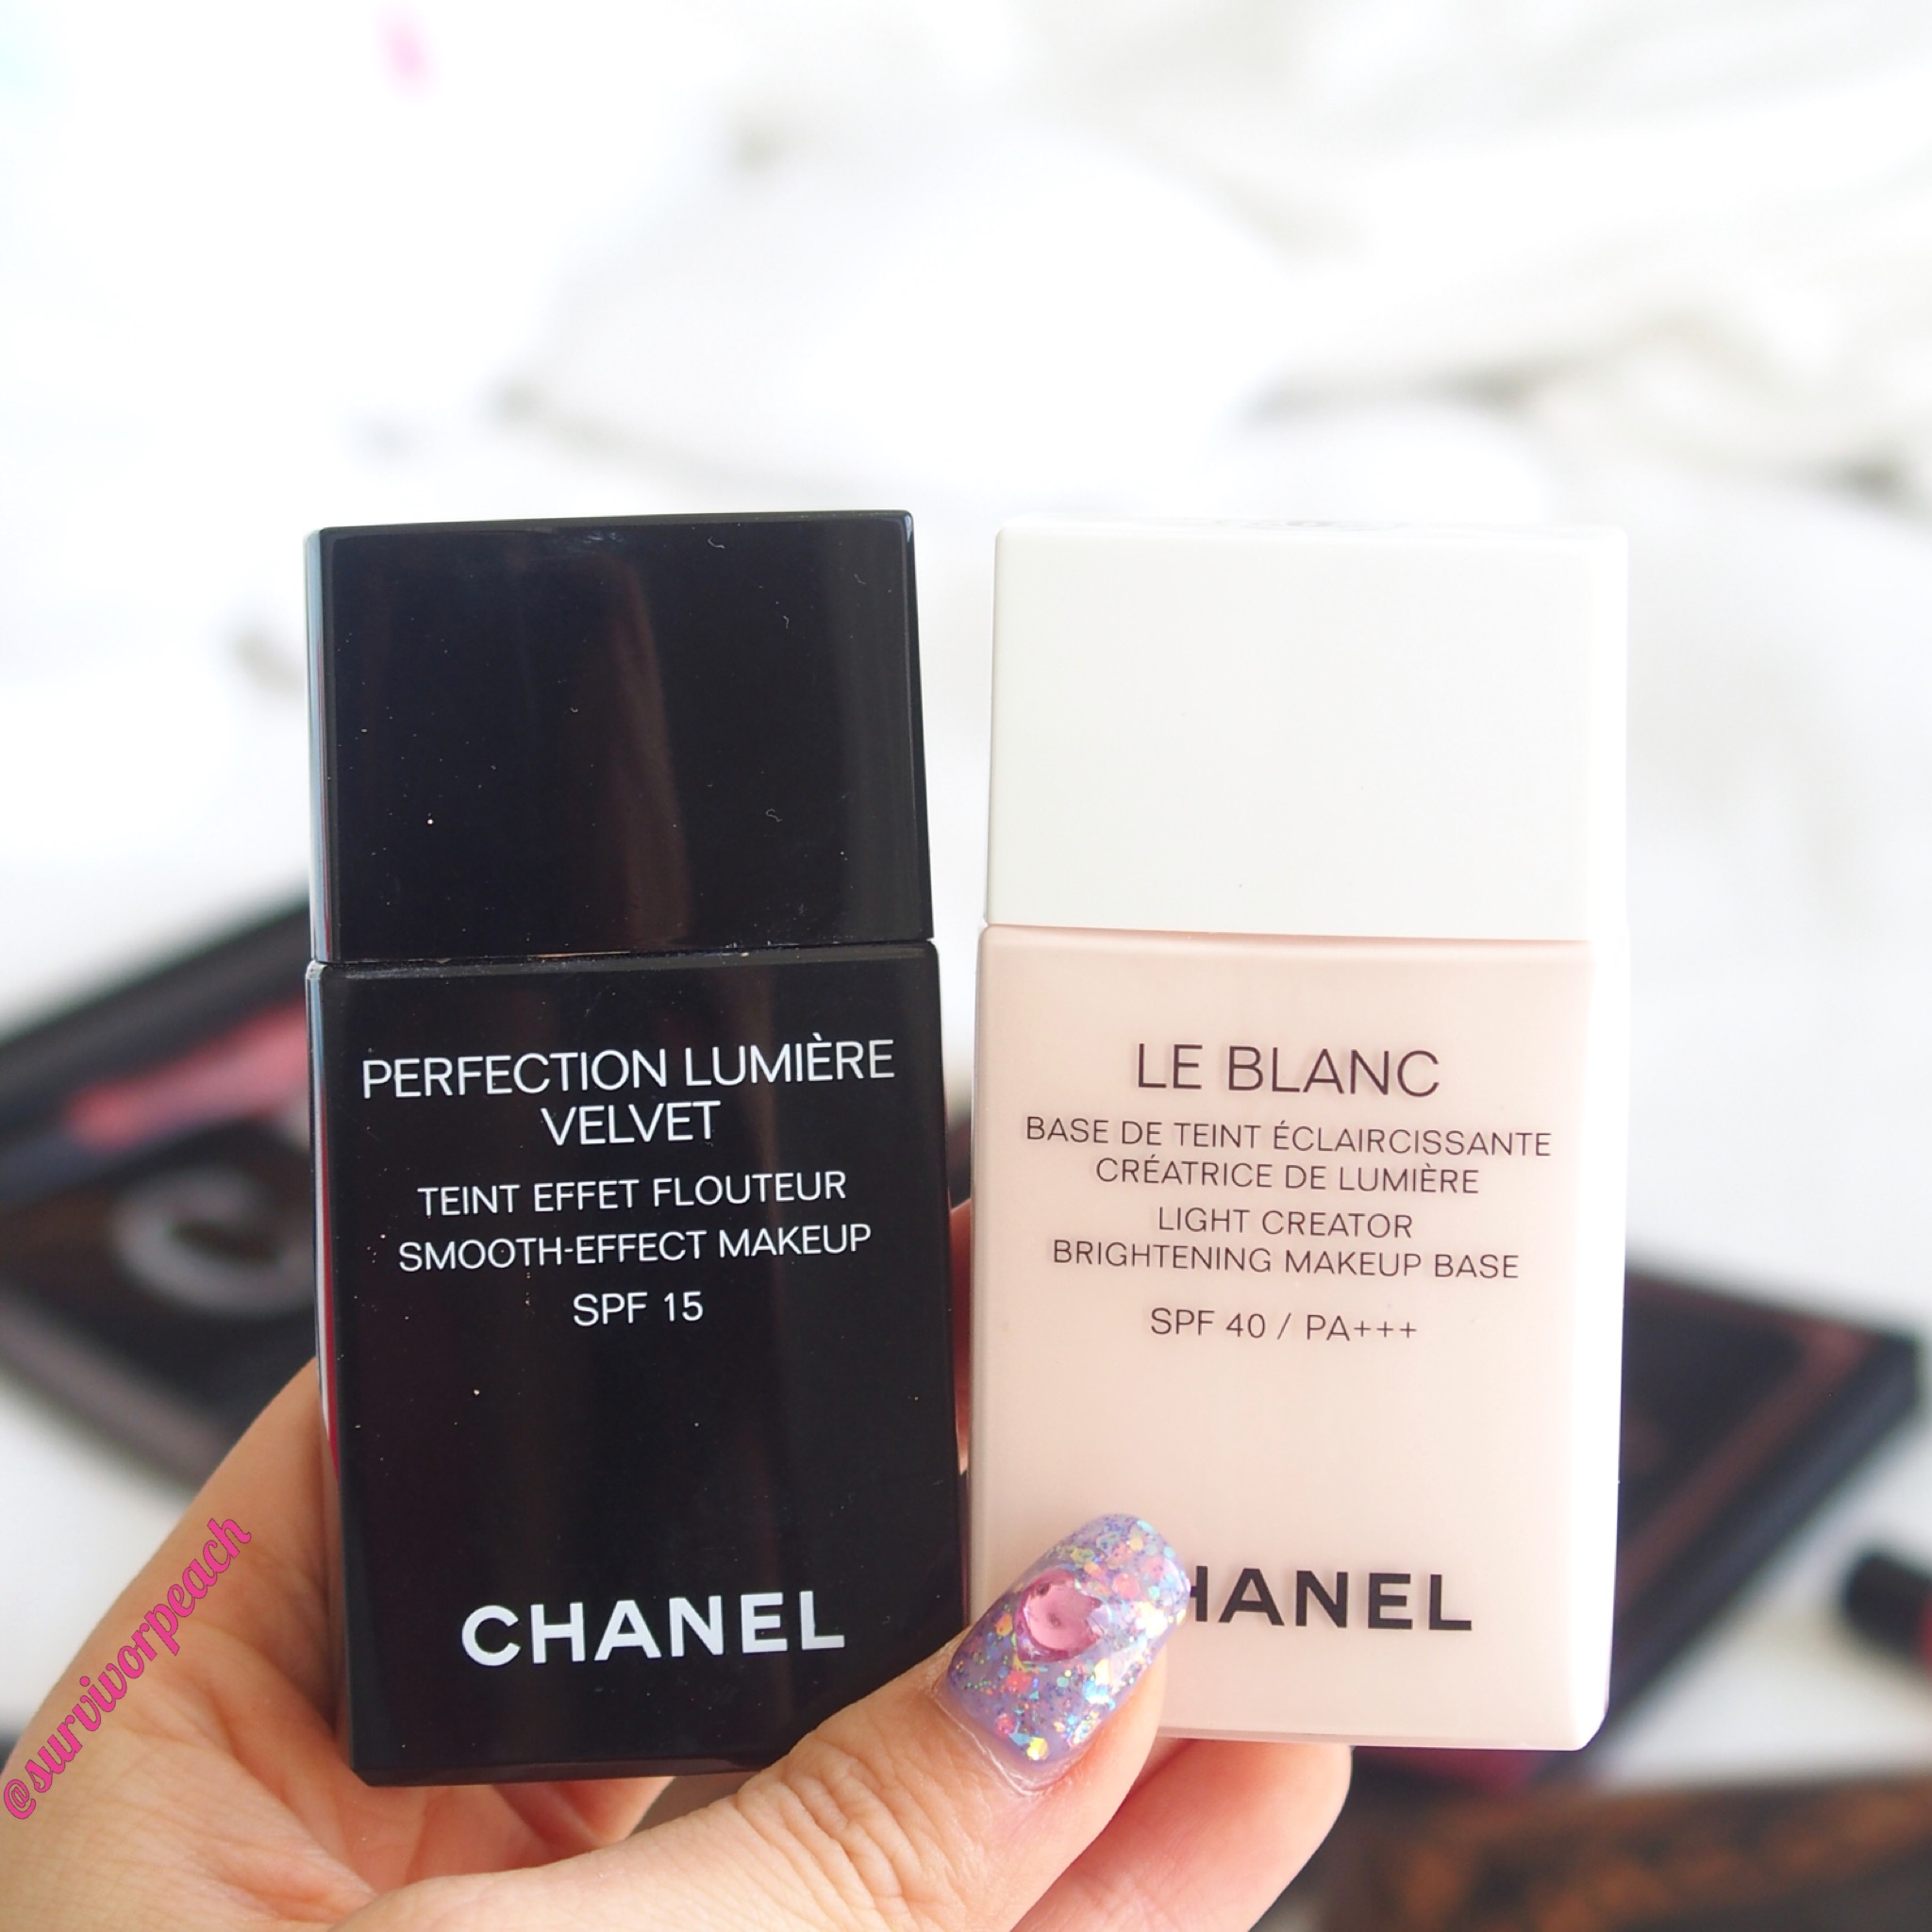 Chanel vs. Chanel